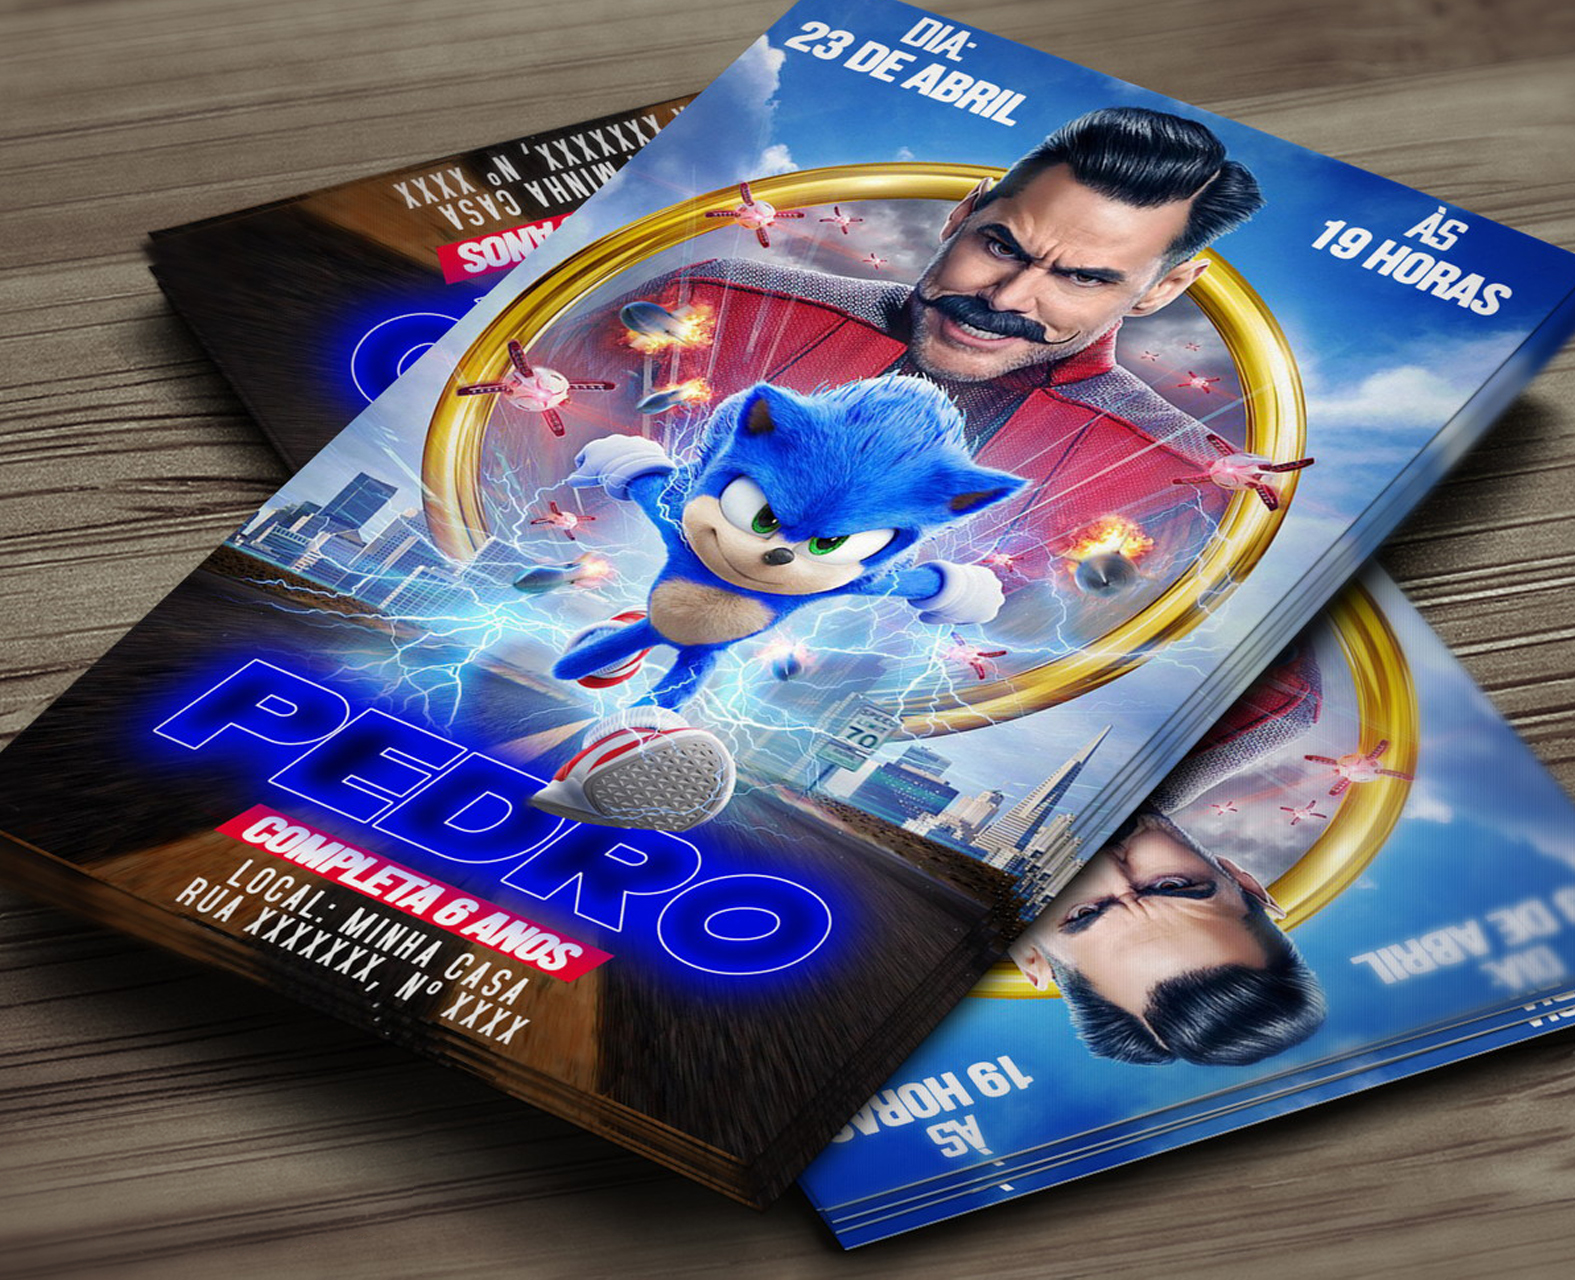 Convite Digital Sonic